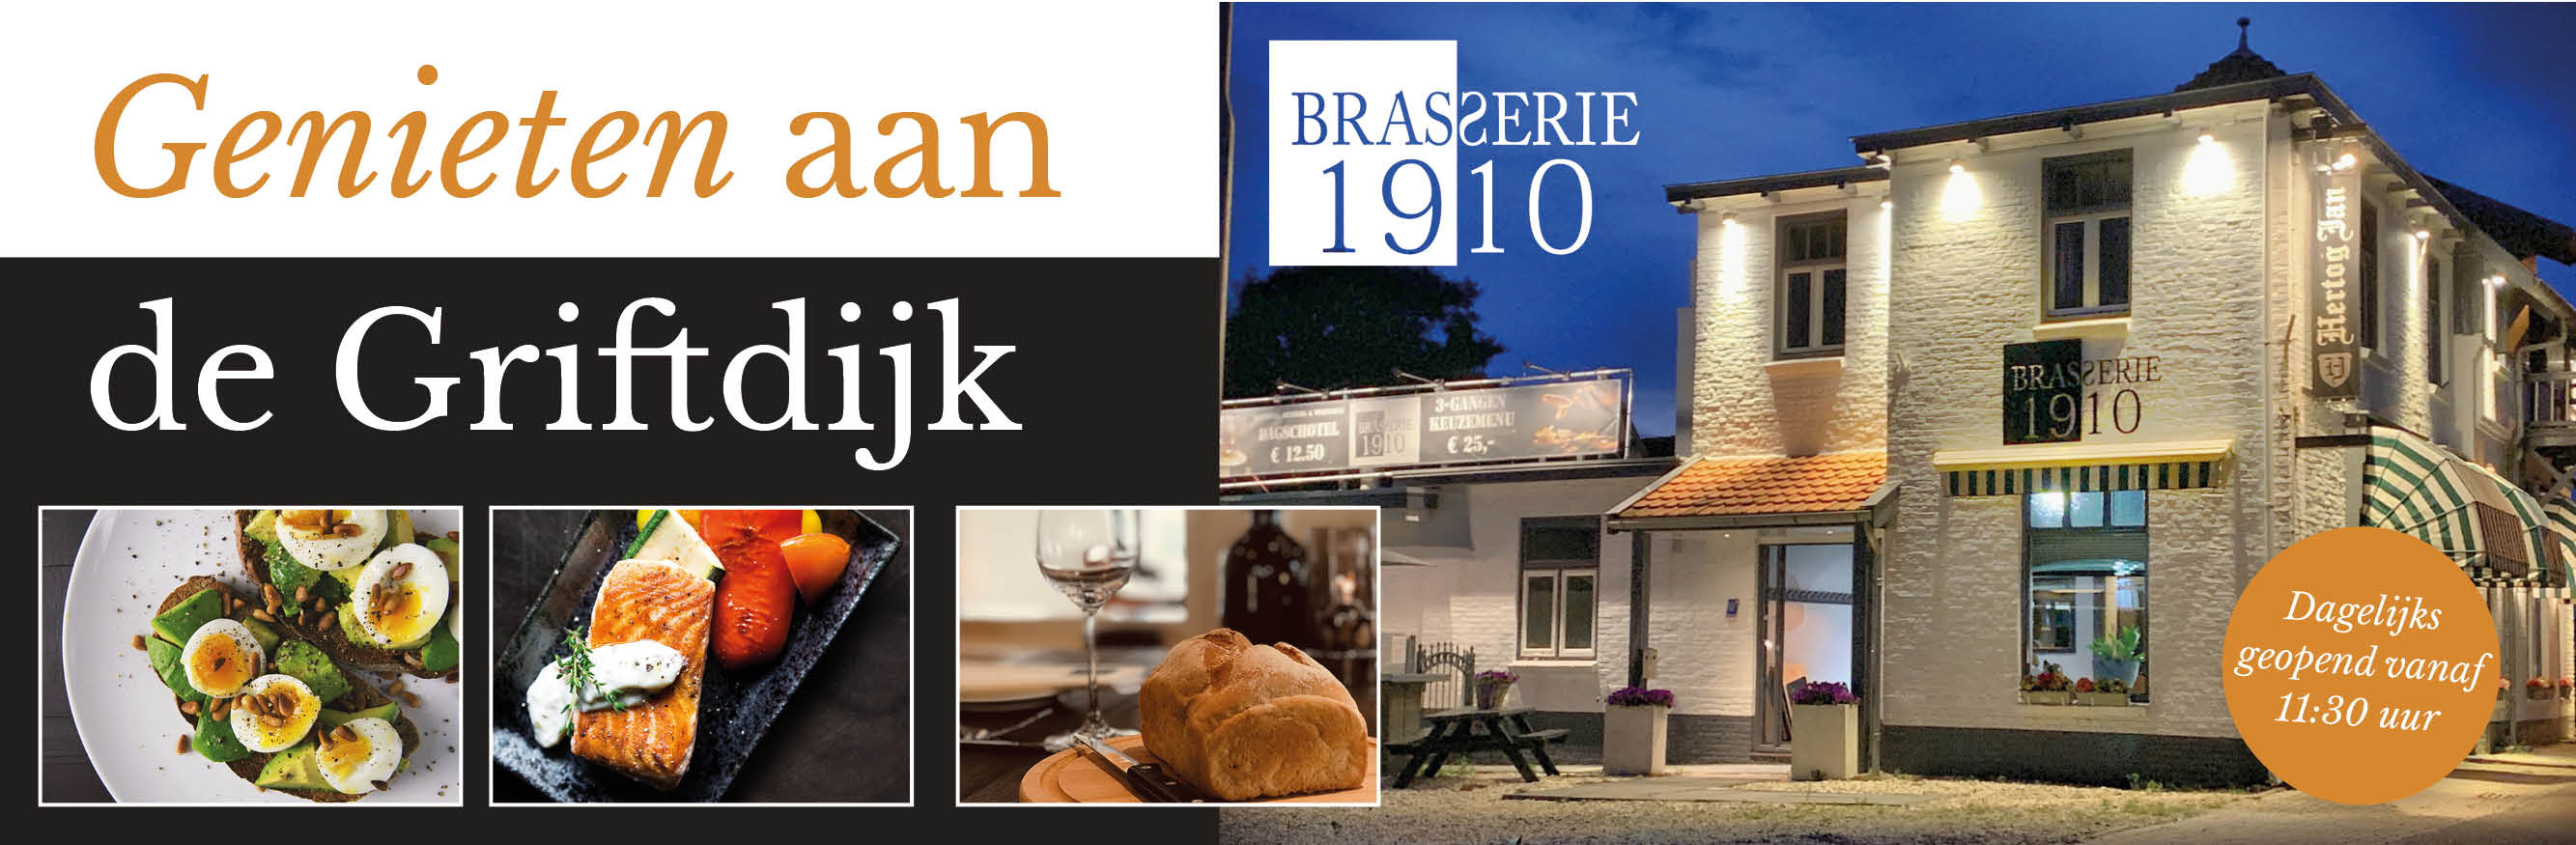 10734 Brasserie 1910